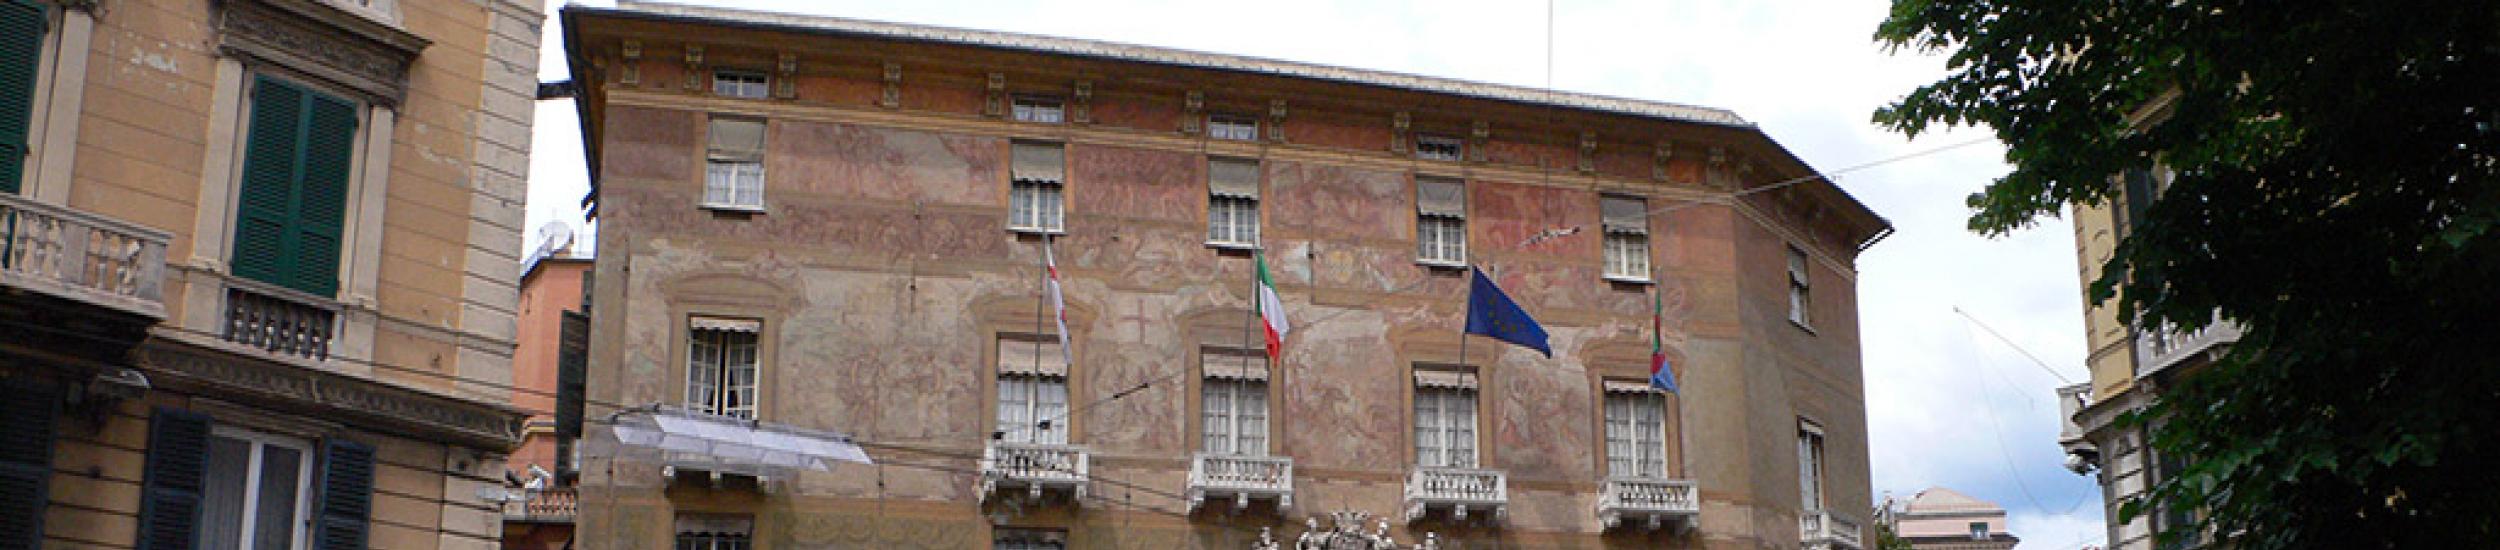 Palazzo_Doria_Spinola